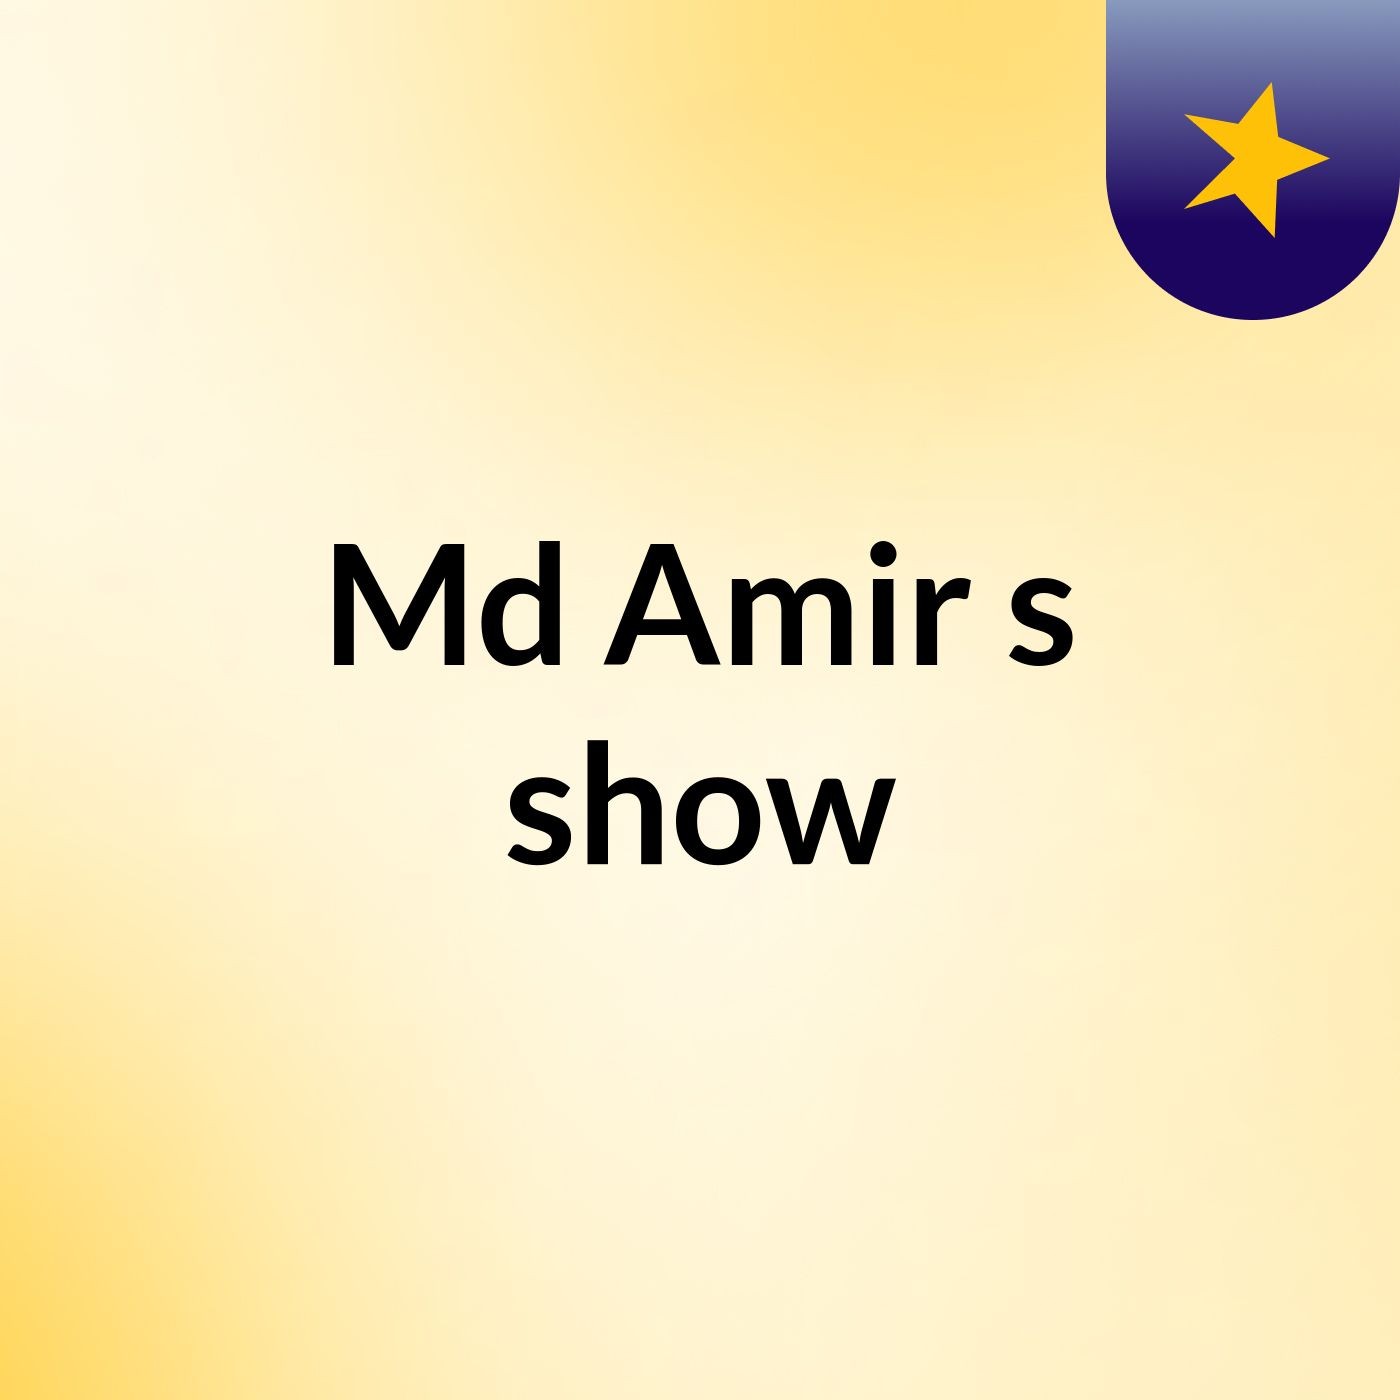 Md Amir's show